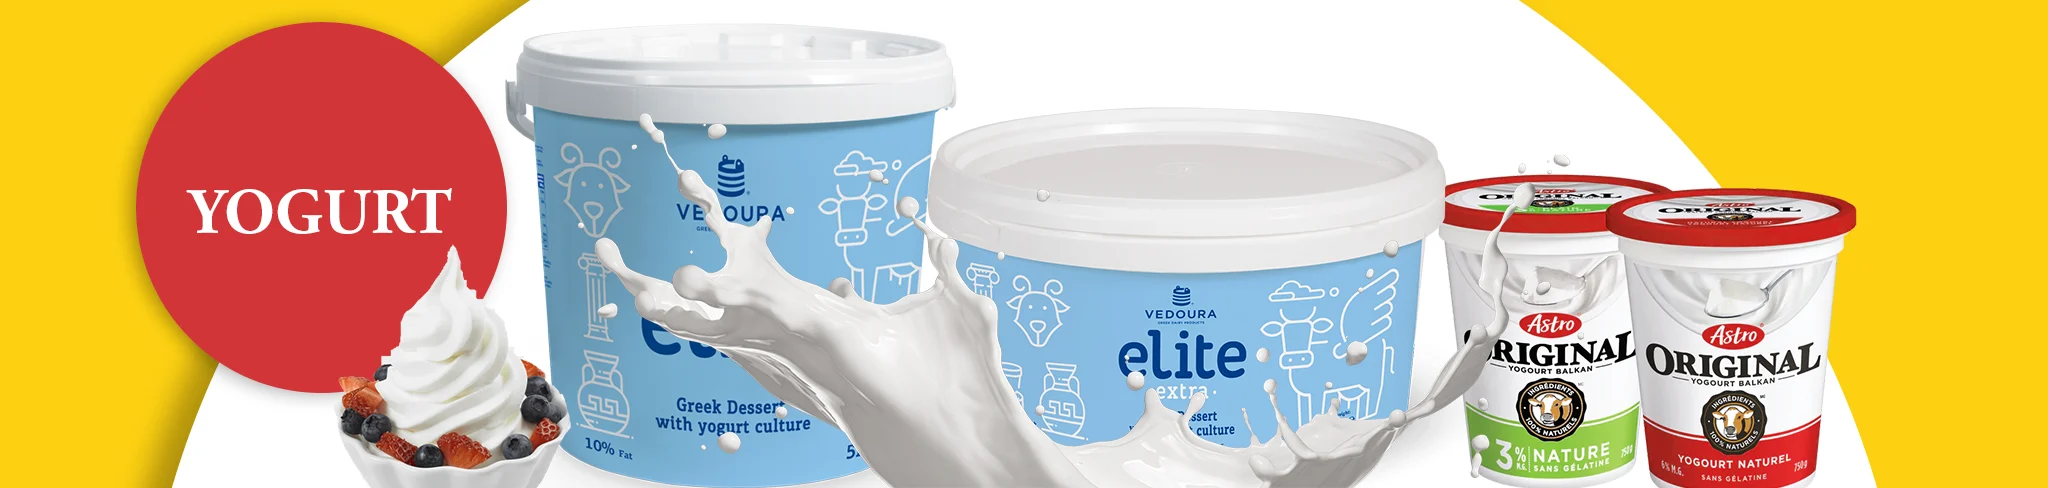 Yogurt Products